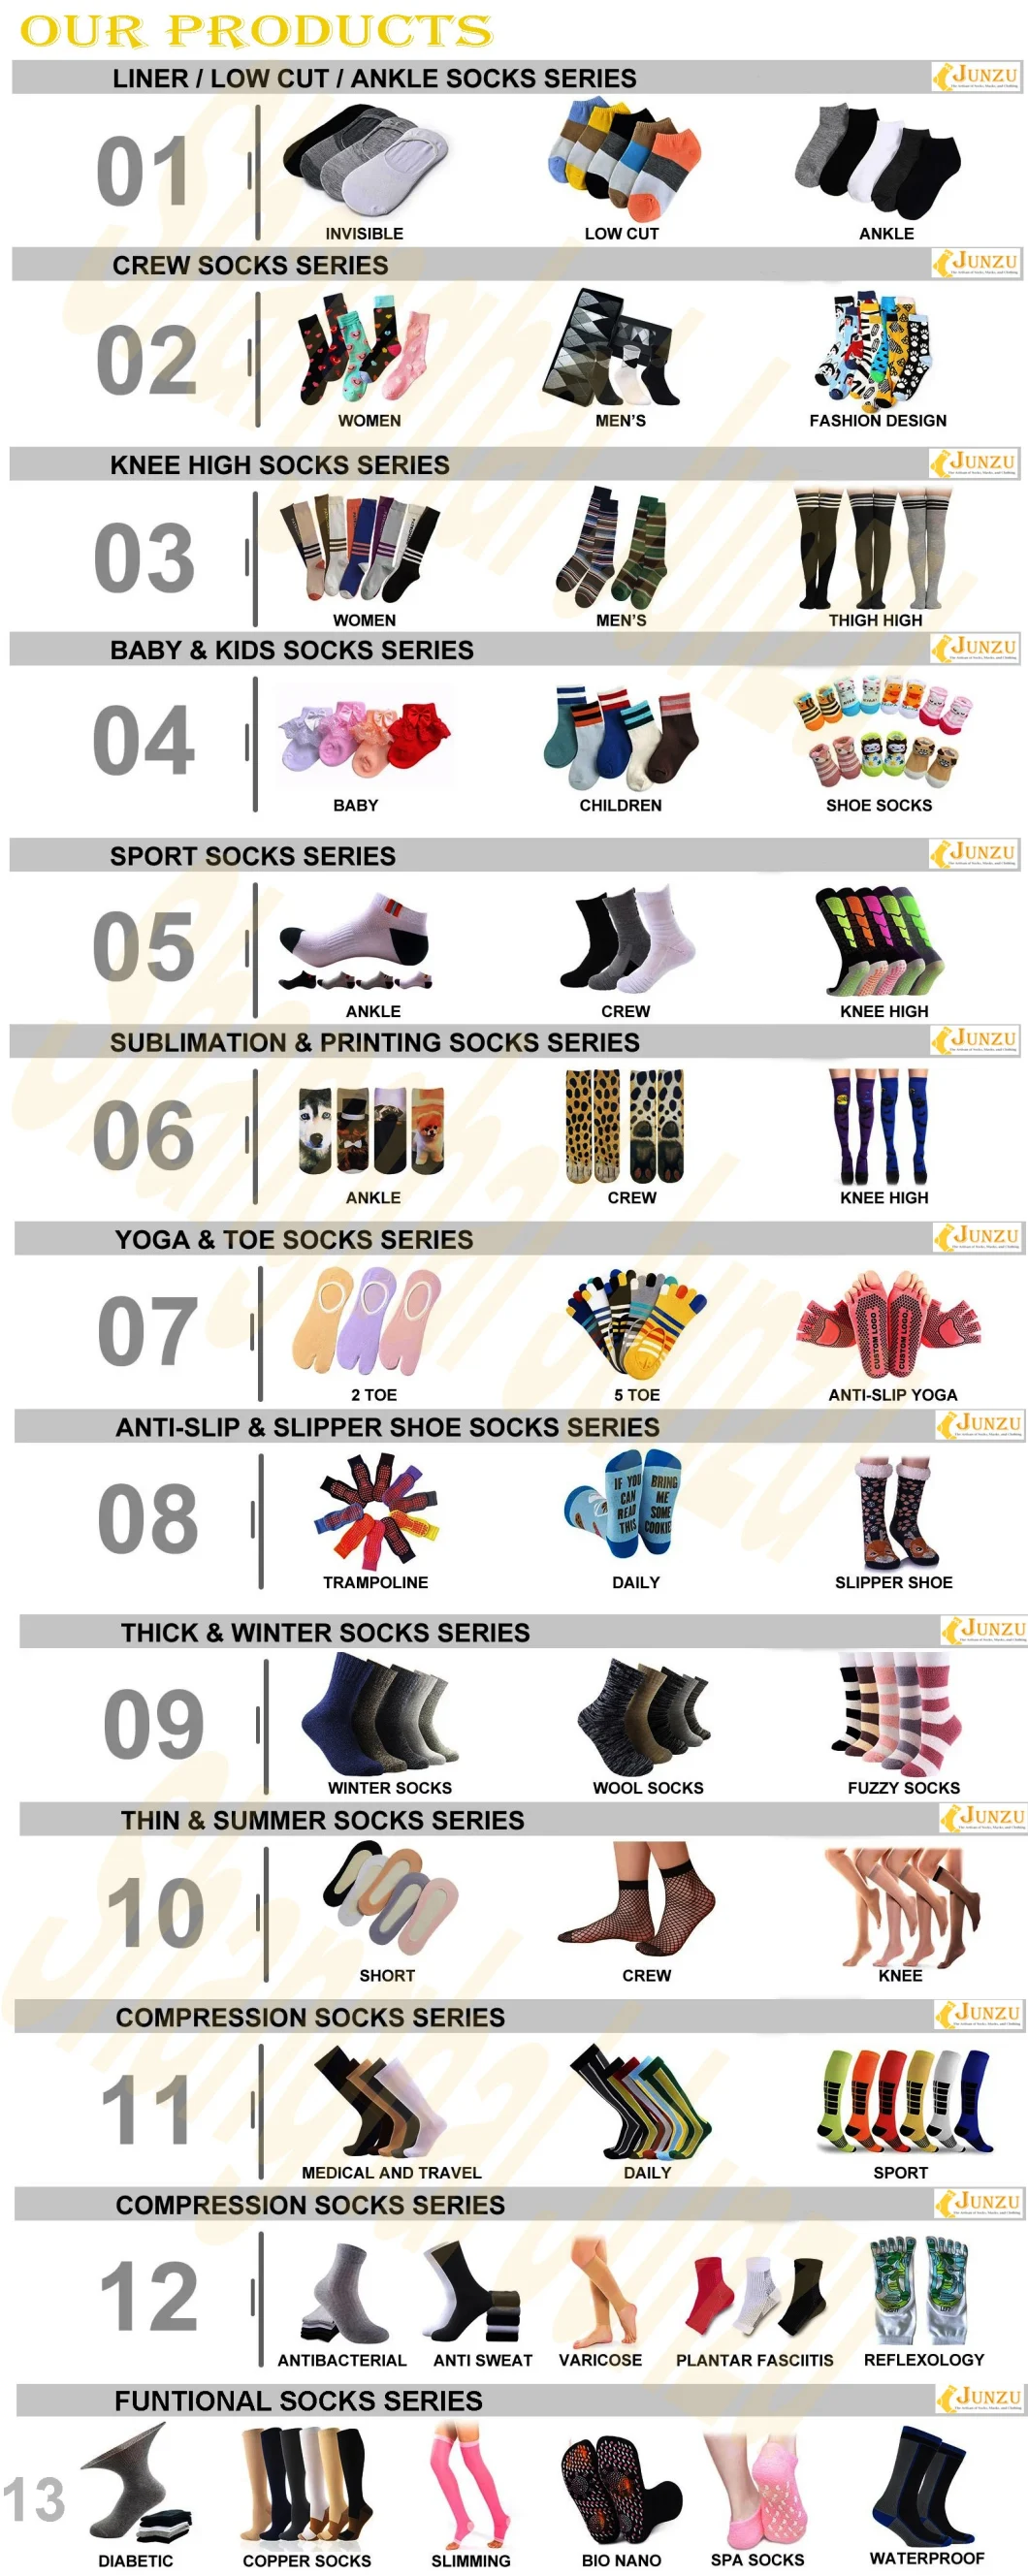 Summer Socks Breathable Cotton Spandex Best Quality Ankle Socks Low Cut Summer Socks